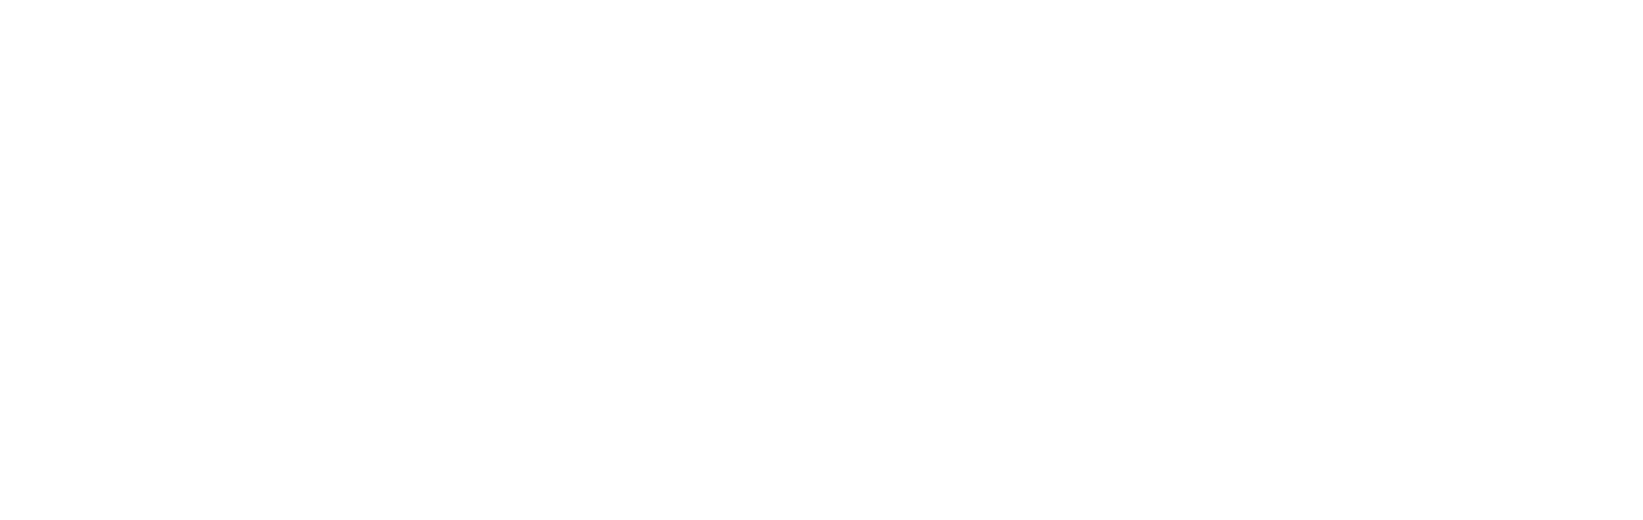 Campbell’s Logo Transparent Images